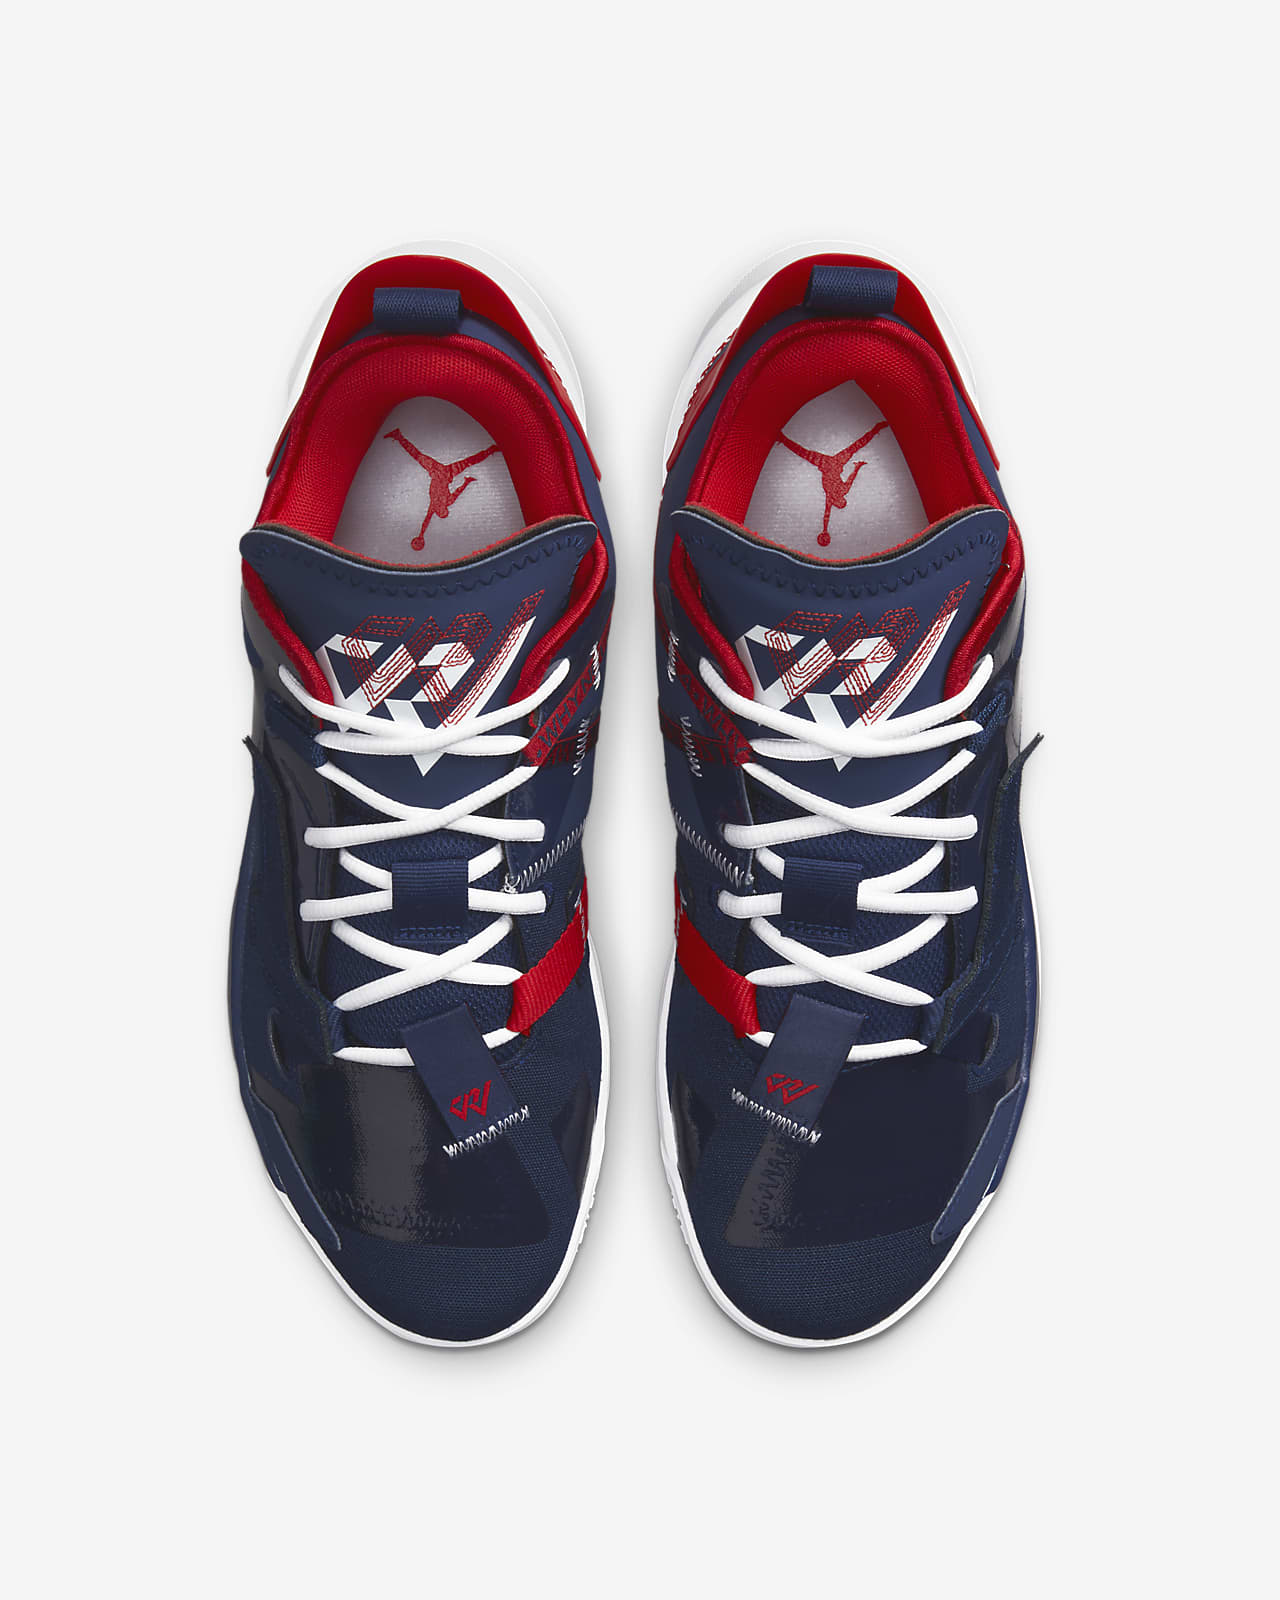 Jordan 'Why Not?' Zer0.4 Basketball Shoes. Nike.com